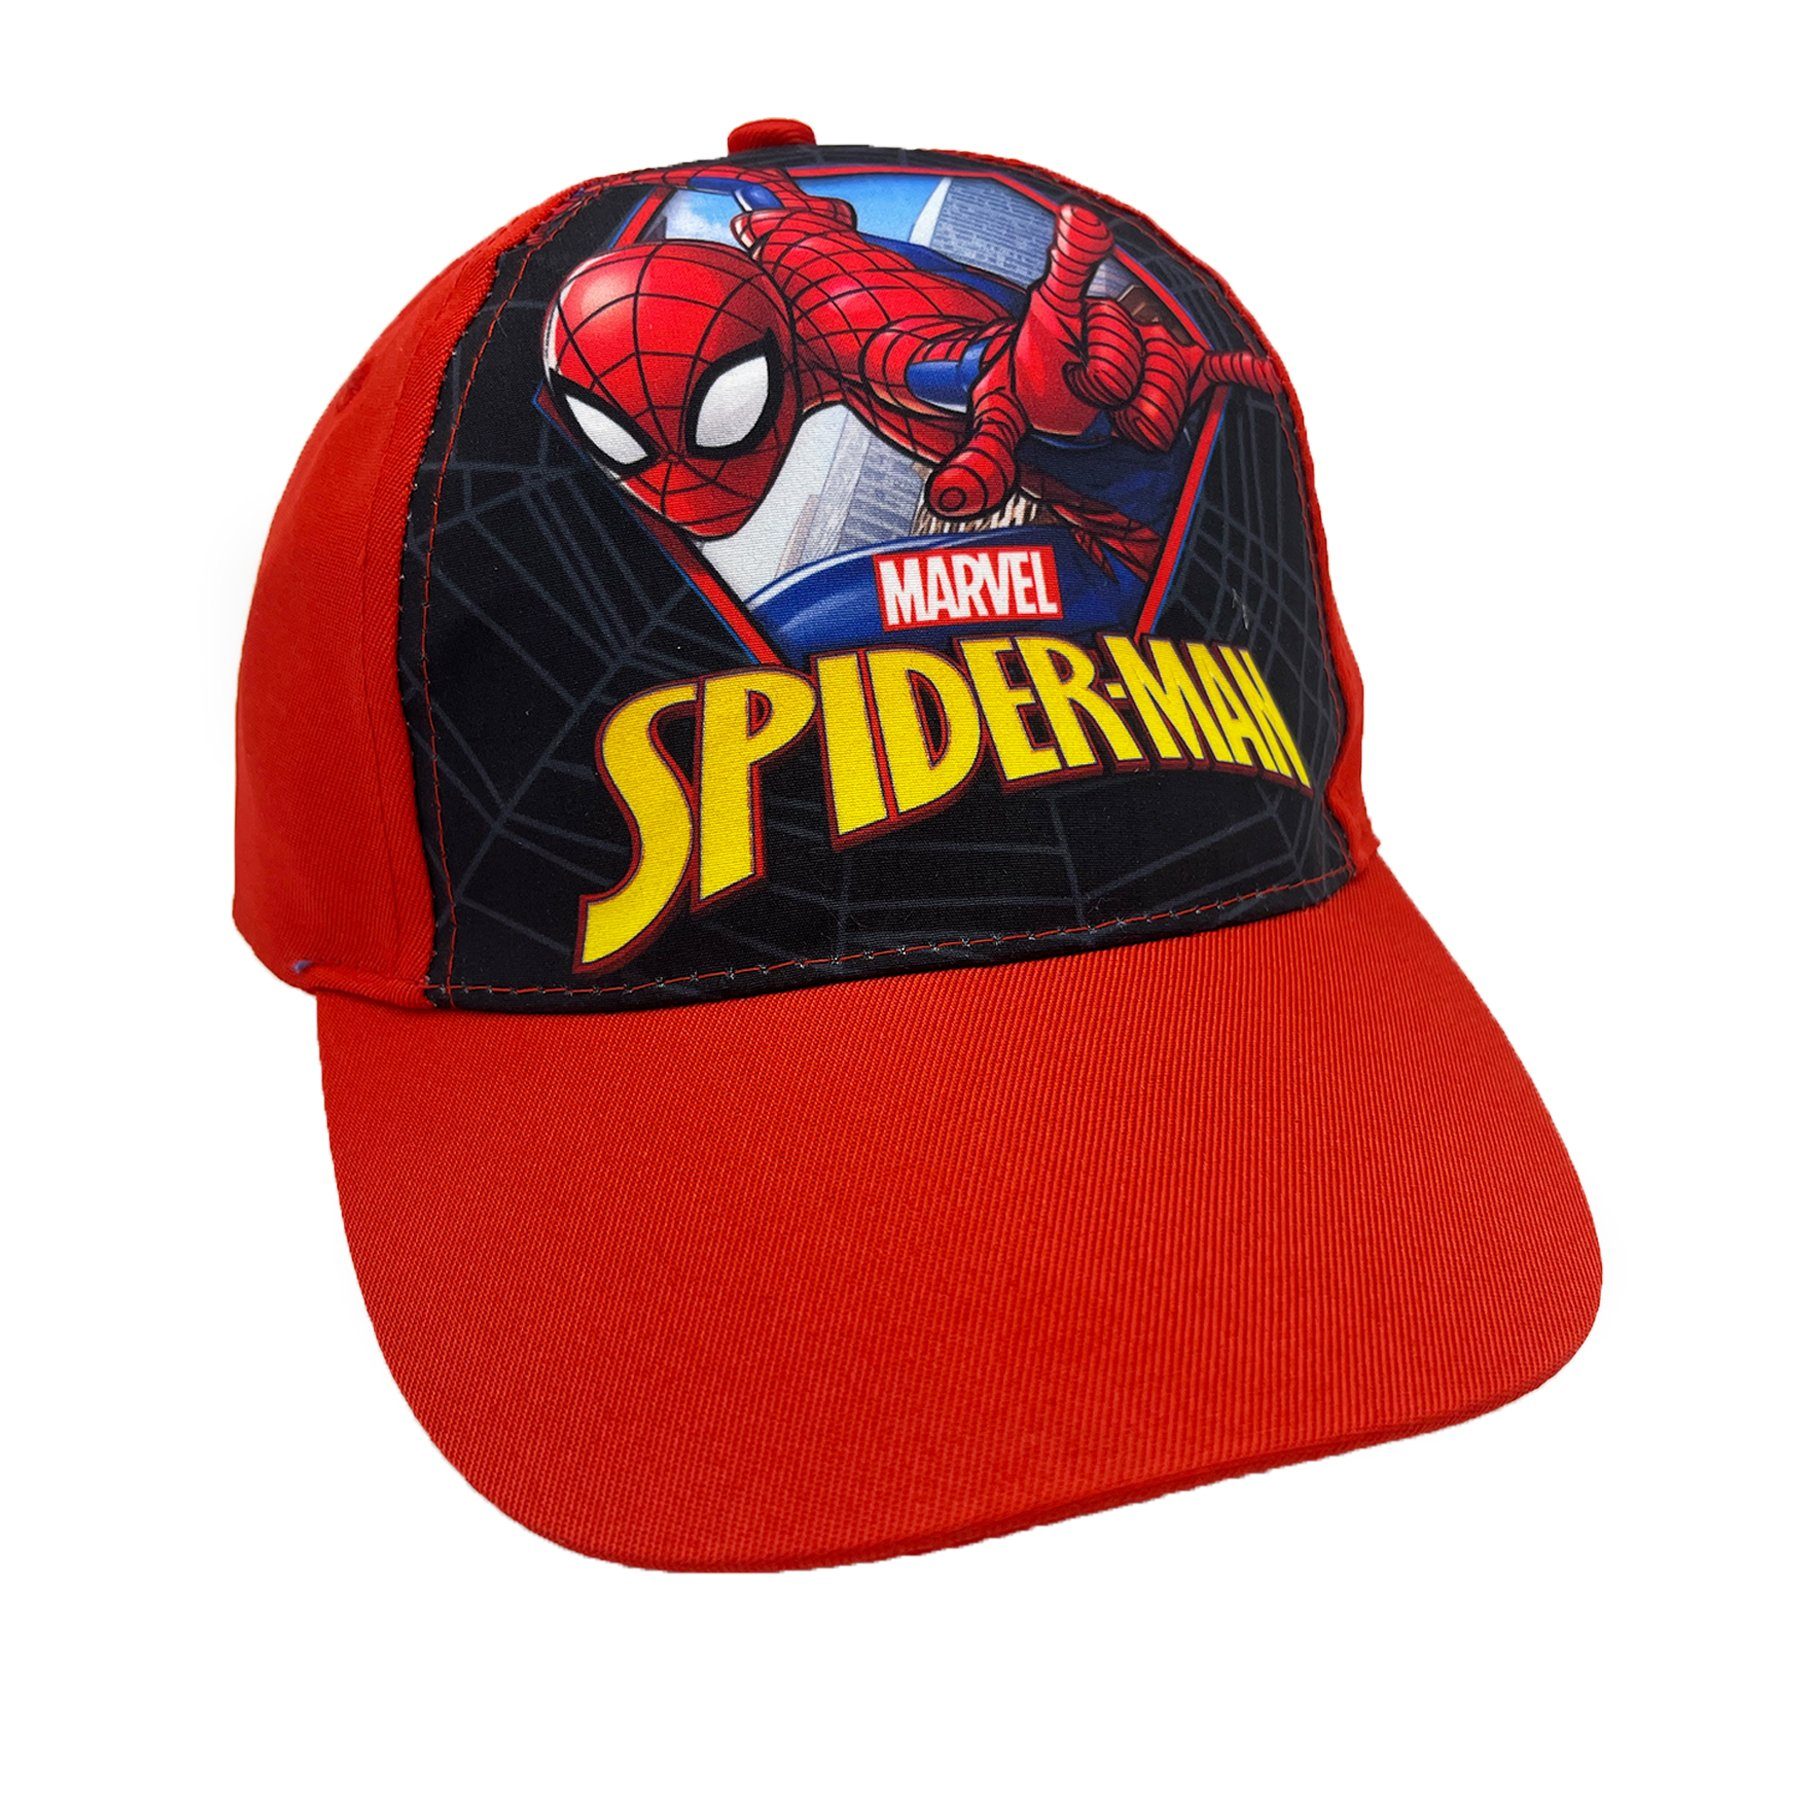 Kinder Kids (Gr. 92 - 146) Spiderman Baseball Cap Kappe Mütze